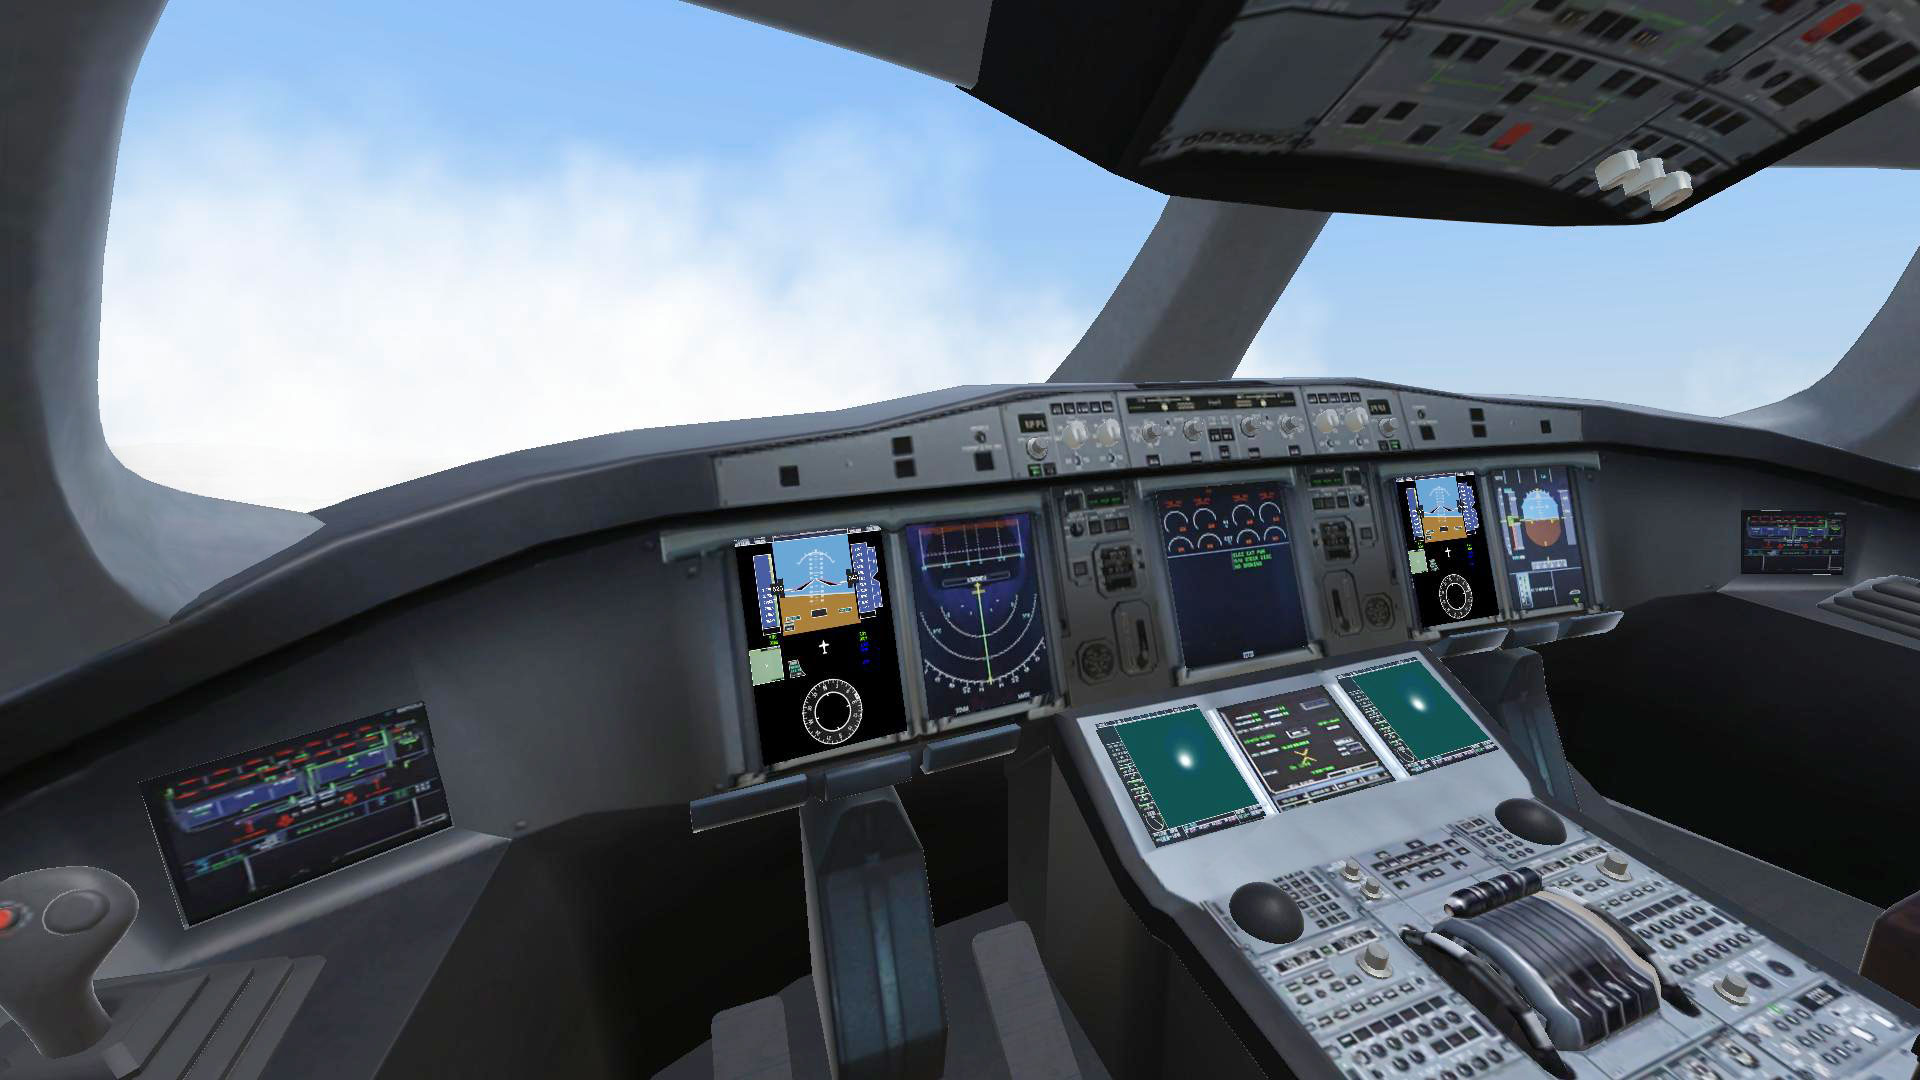 flight simulator pc game free